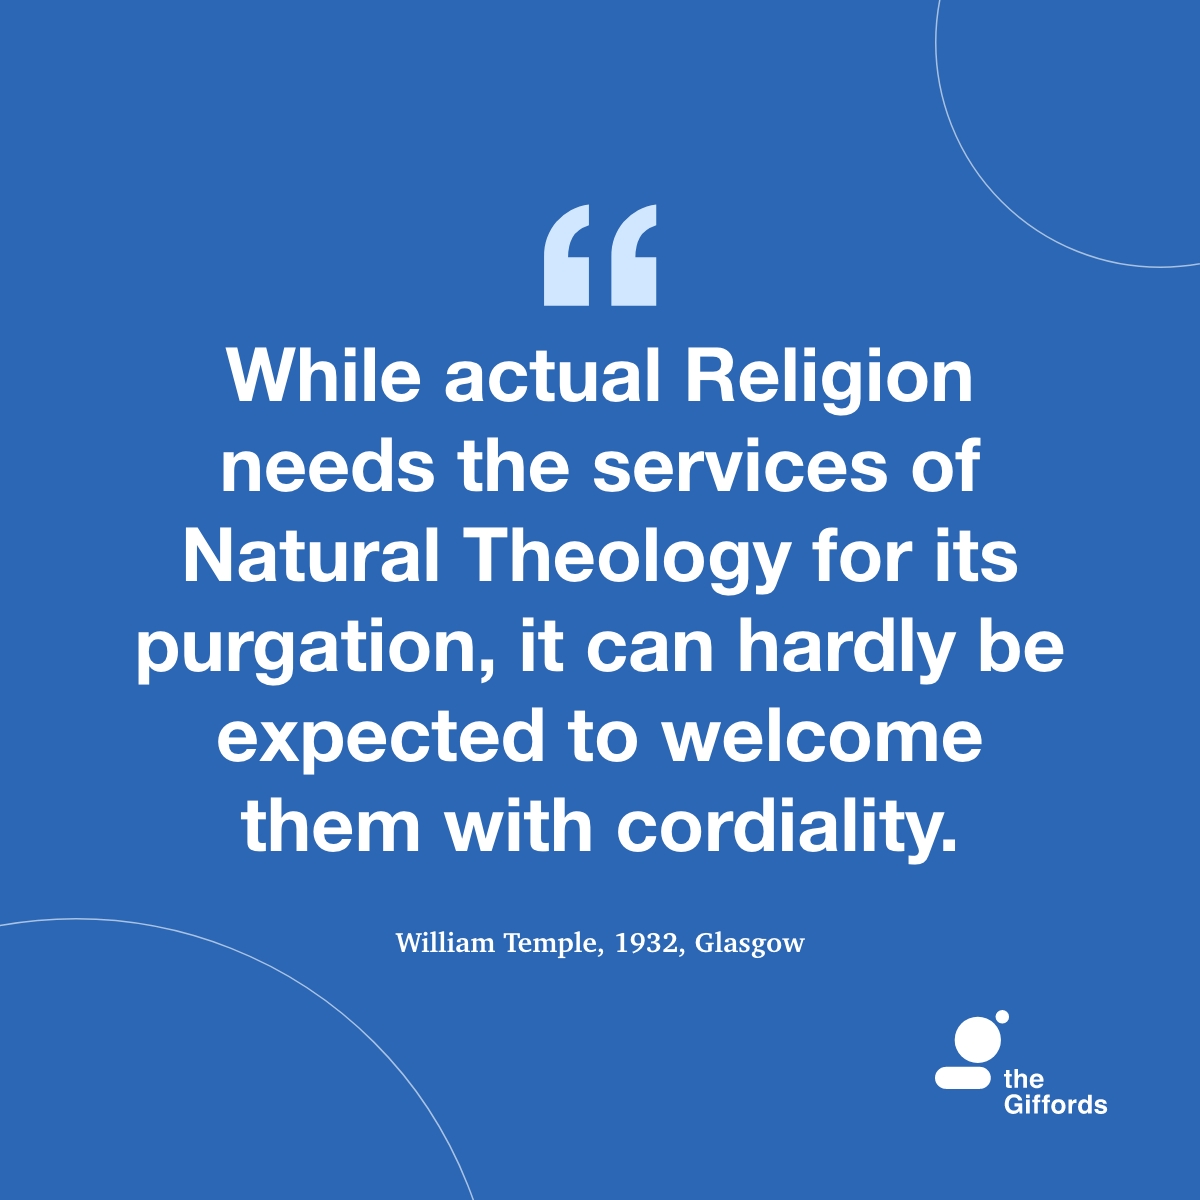 Religion v. Natural Theology?